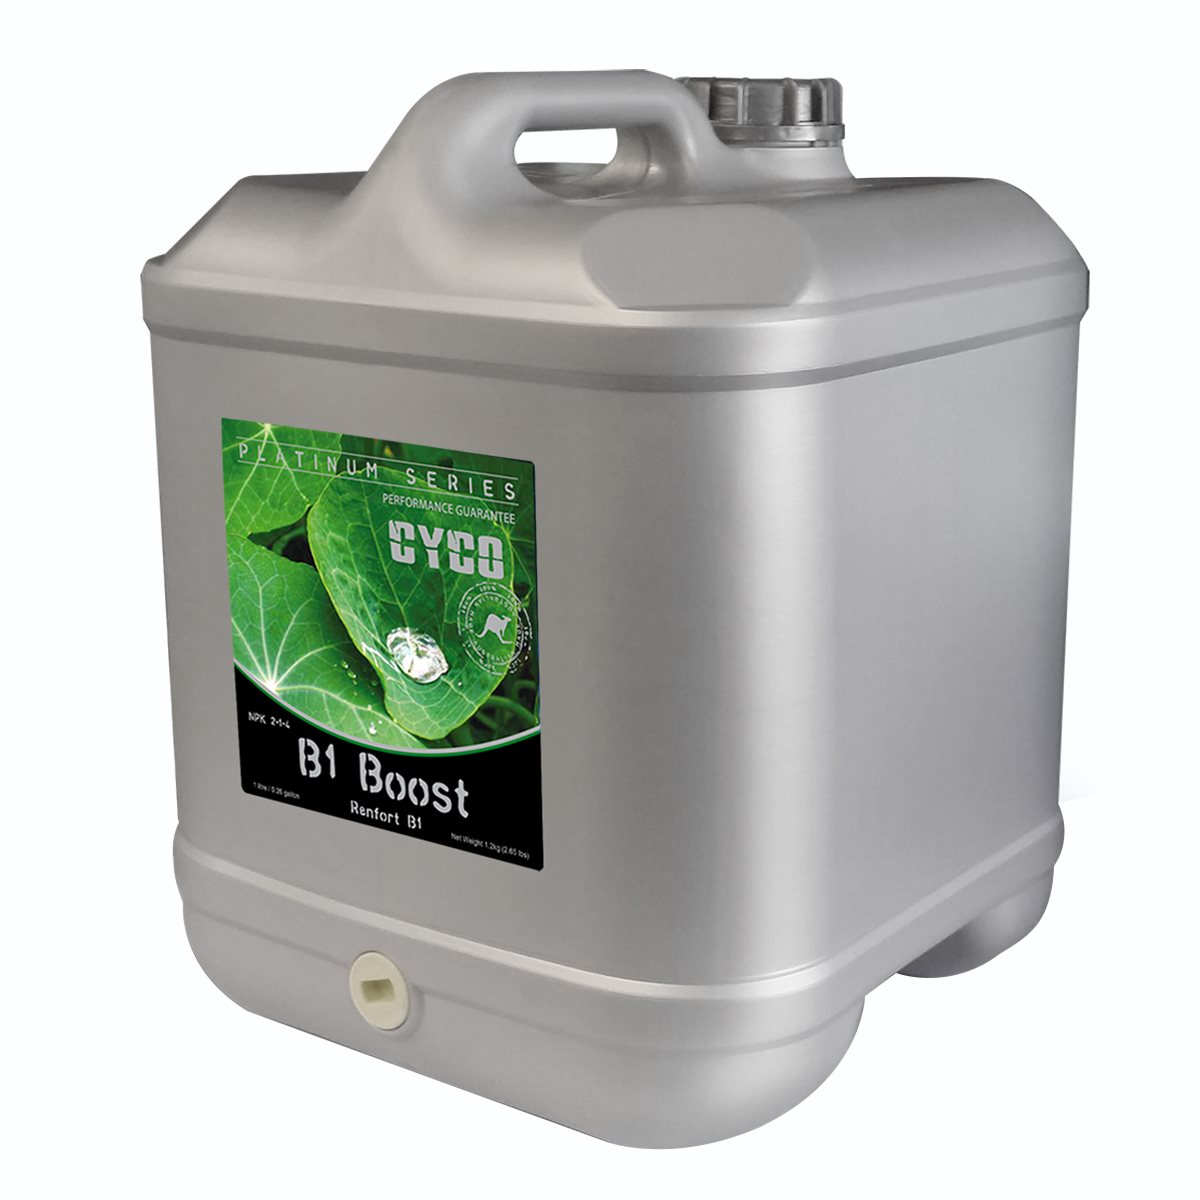 Cyco Platinum Series B1 Boost 20 Liter